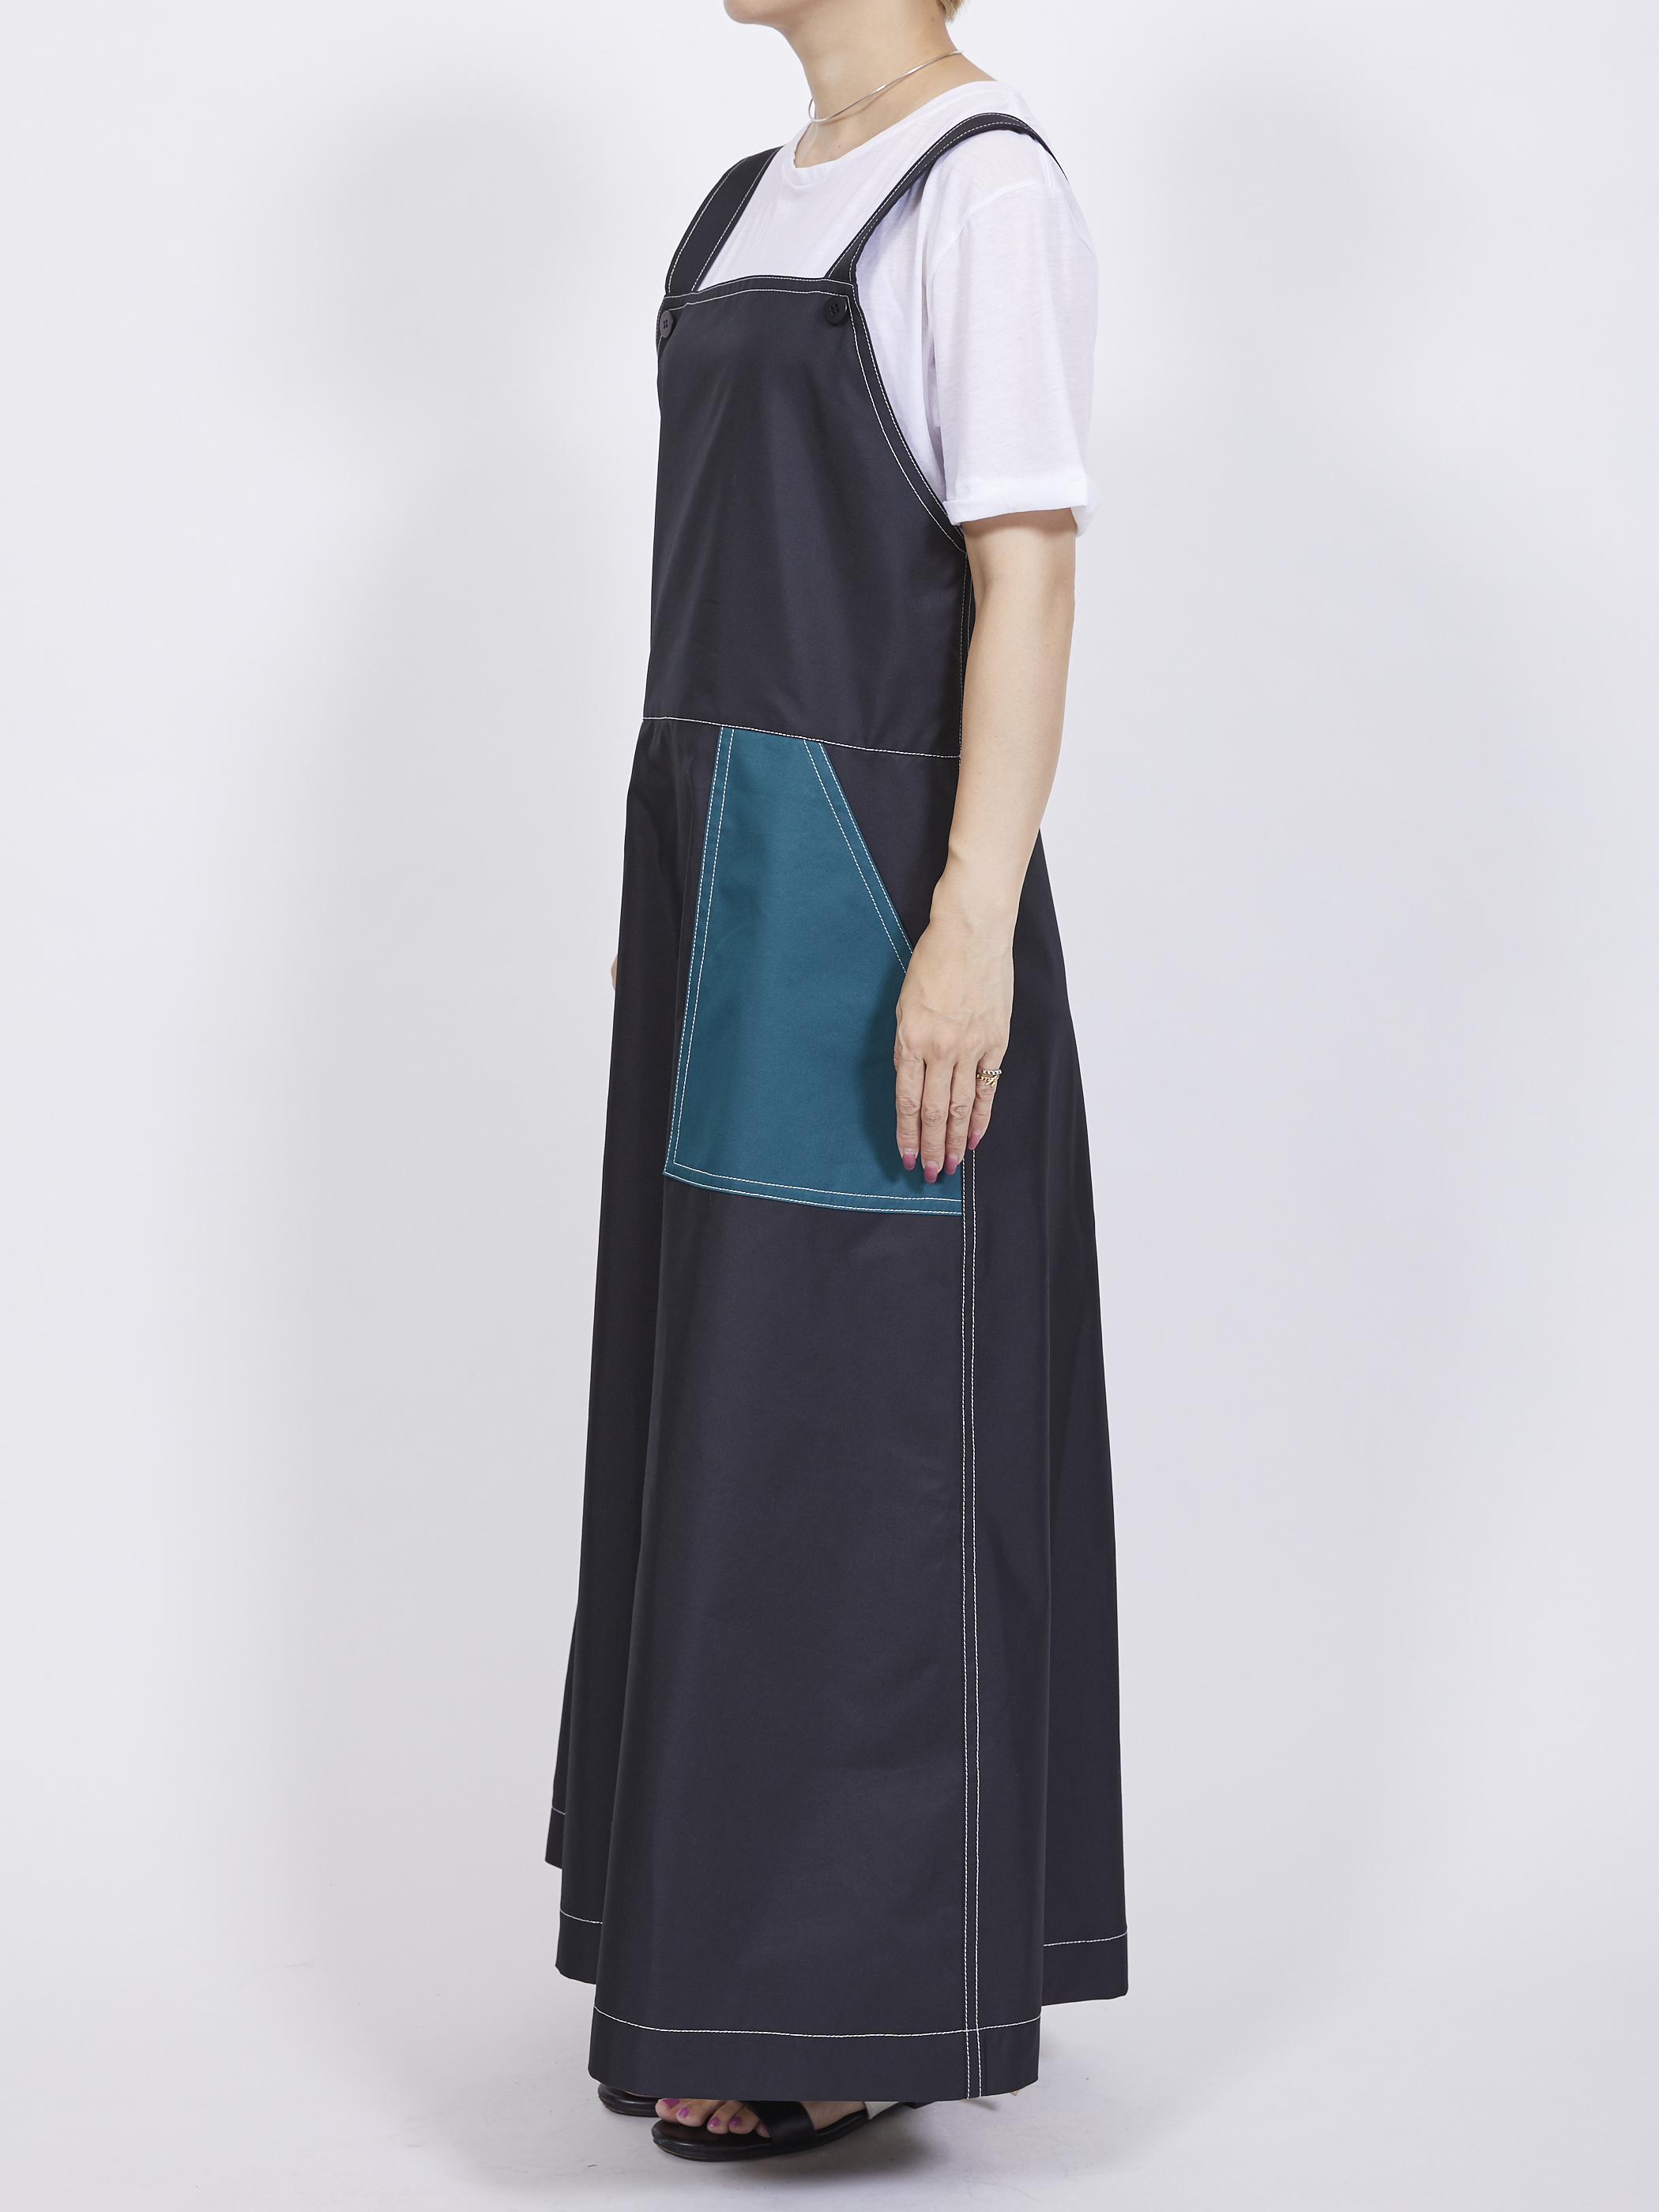 【SALE】マイパンダ bicolored jumper skirt